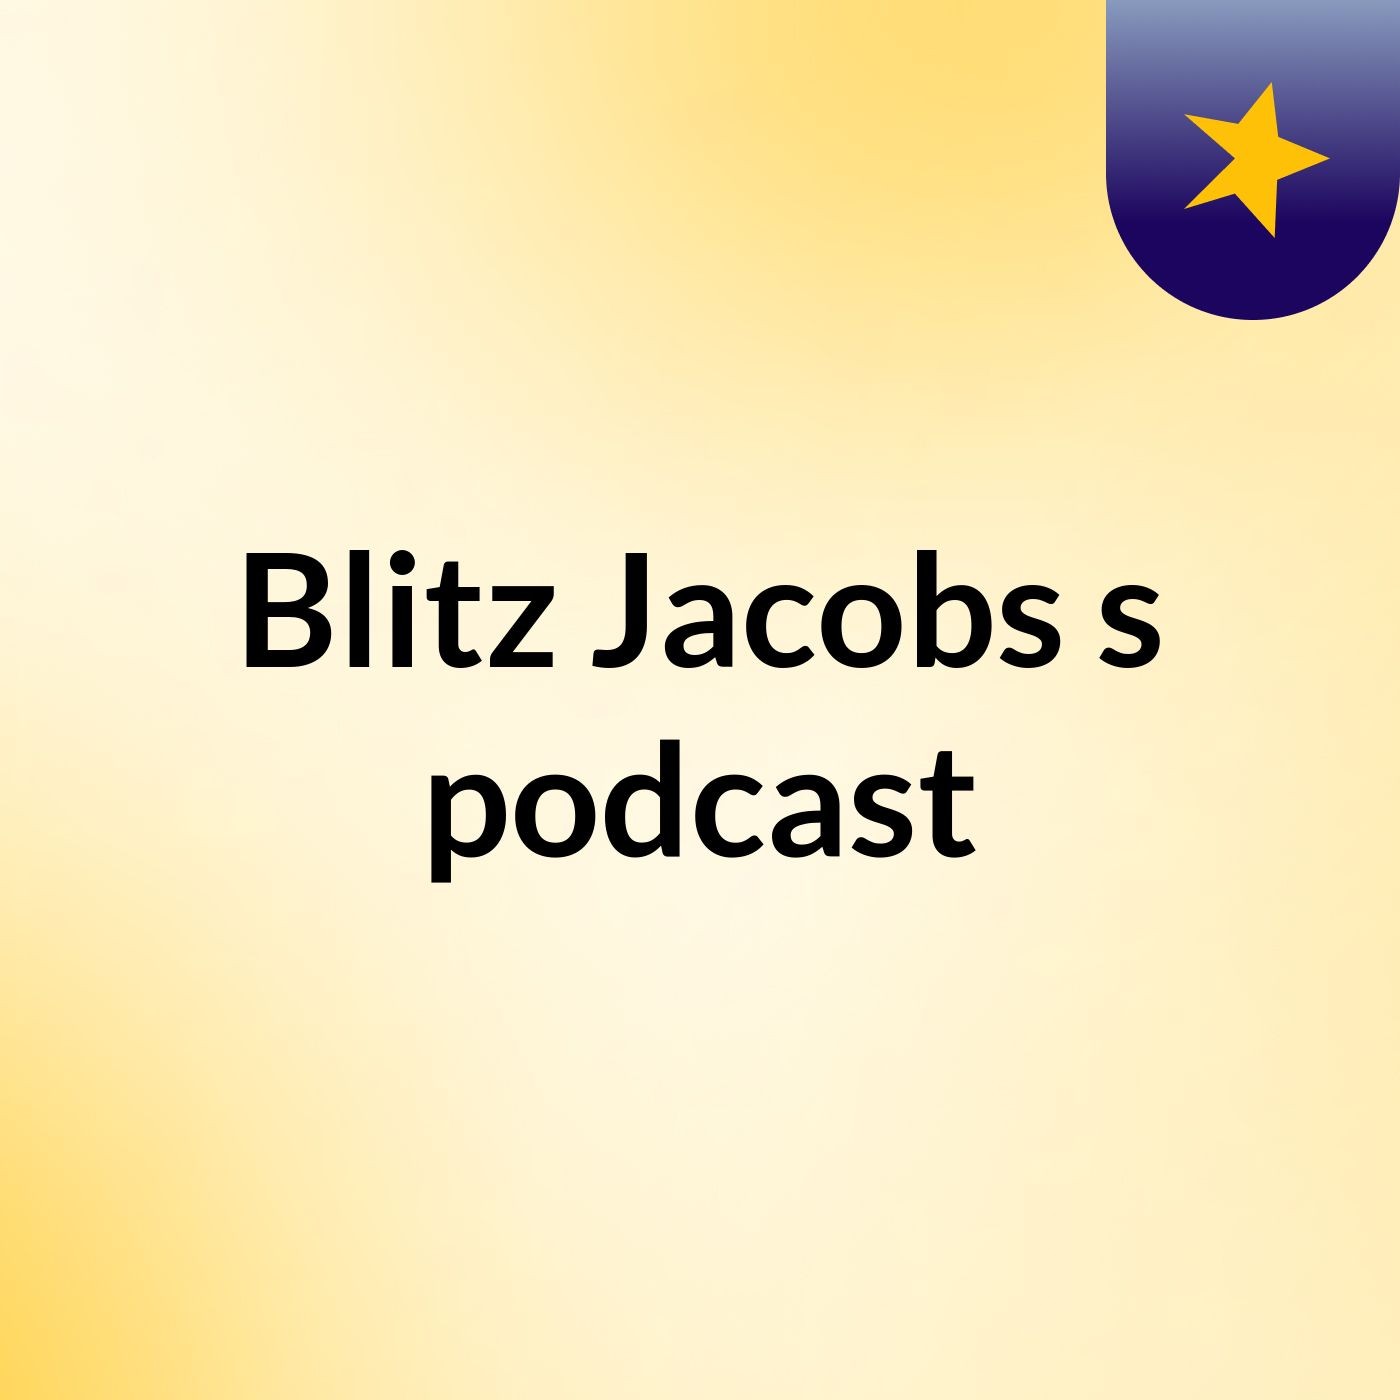 Blitz Jacobs's podcast